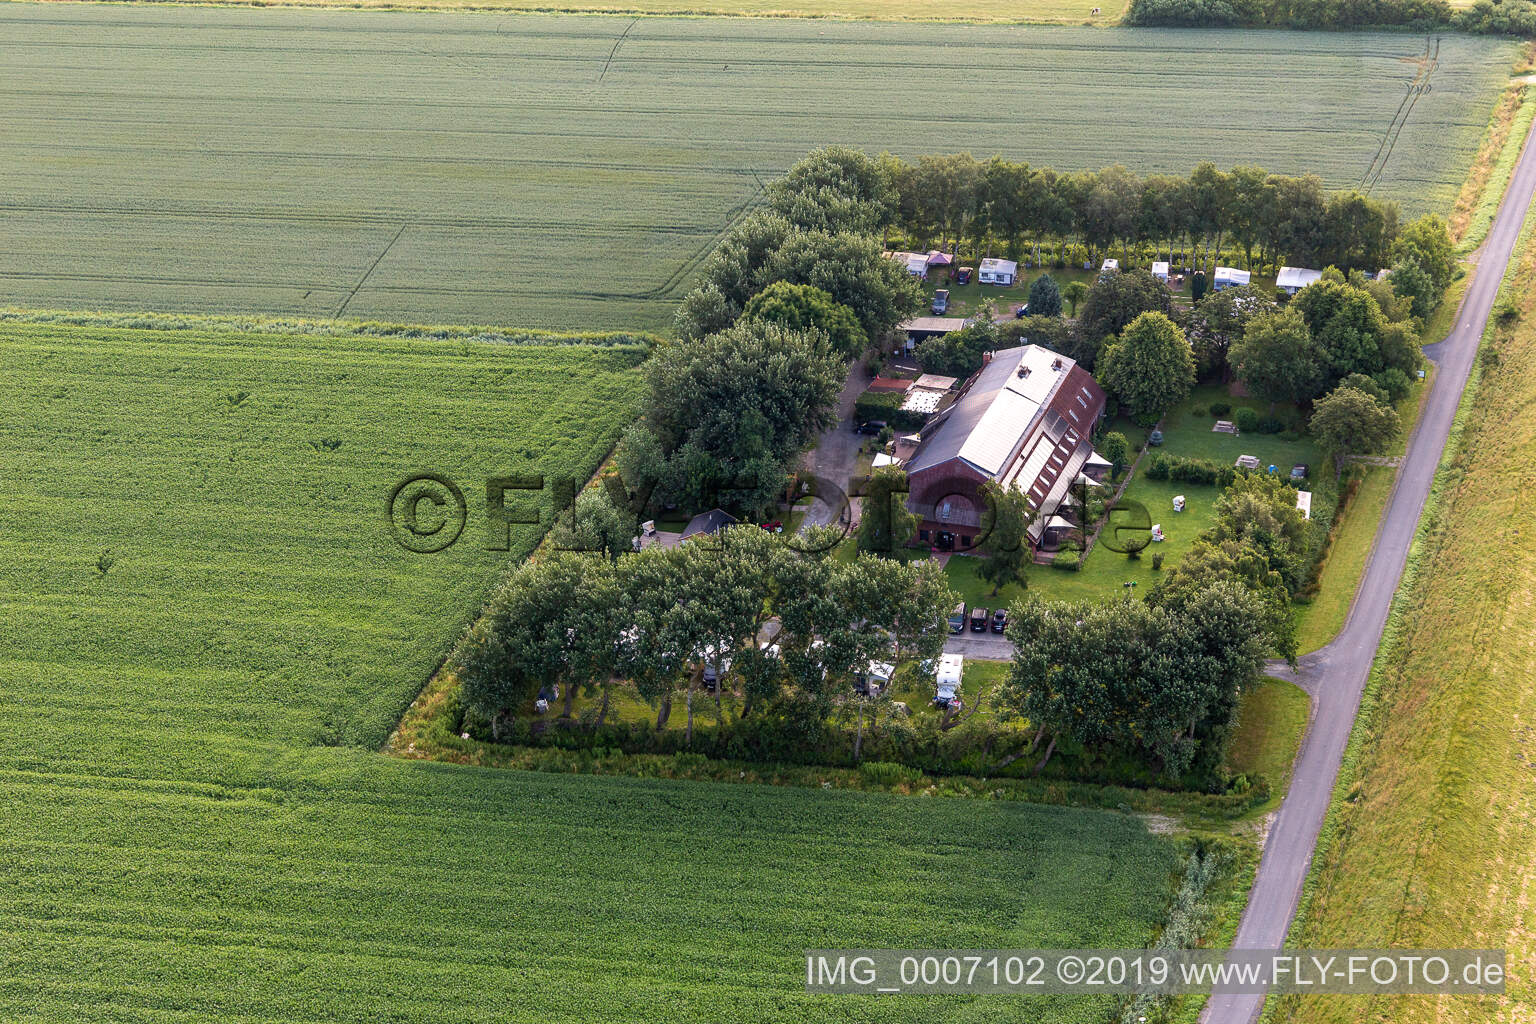 Aerial view of Achtern Diek holiday resort in Nordermeldorf in the state Schleswig Holstein, Germany